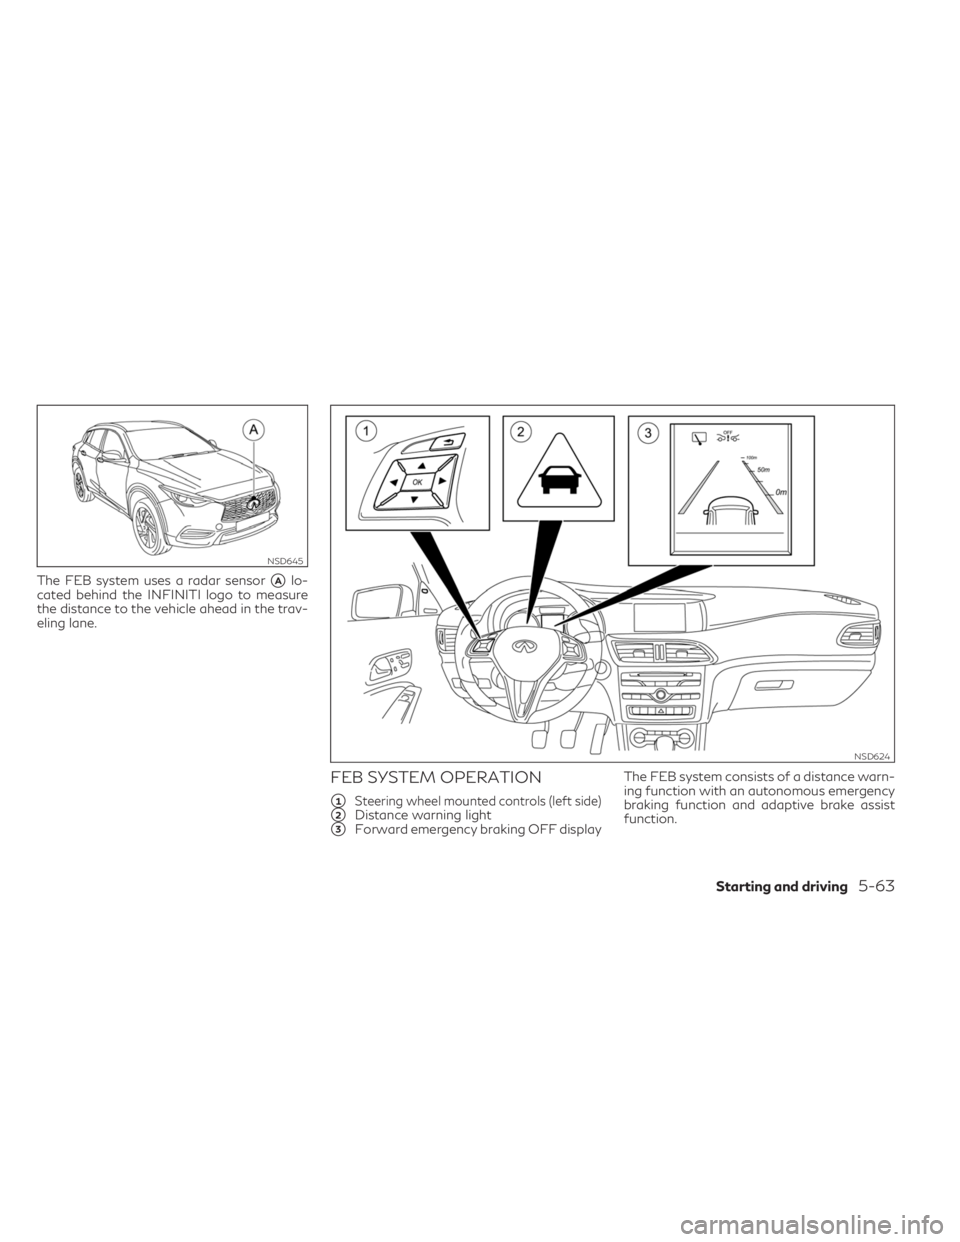 INFINITI QX30 2019  Owners Manual The FEB system uses a radar sensorAlo-
cated behind the INFINITI logo to measure
the distance to the vehicle ahead in the trav-
eling lane.
FEB SYSTEM OPERATION
1Steering wheel mounted controls (lef